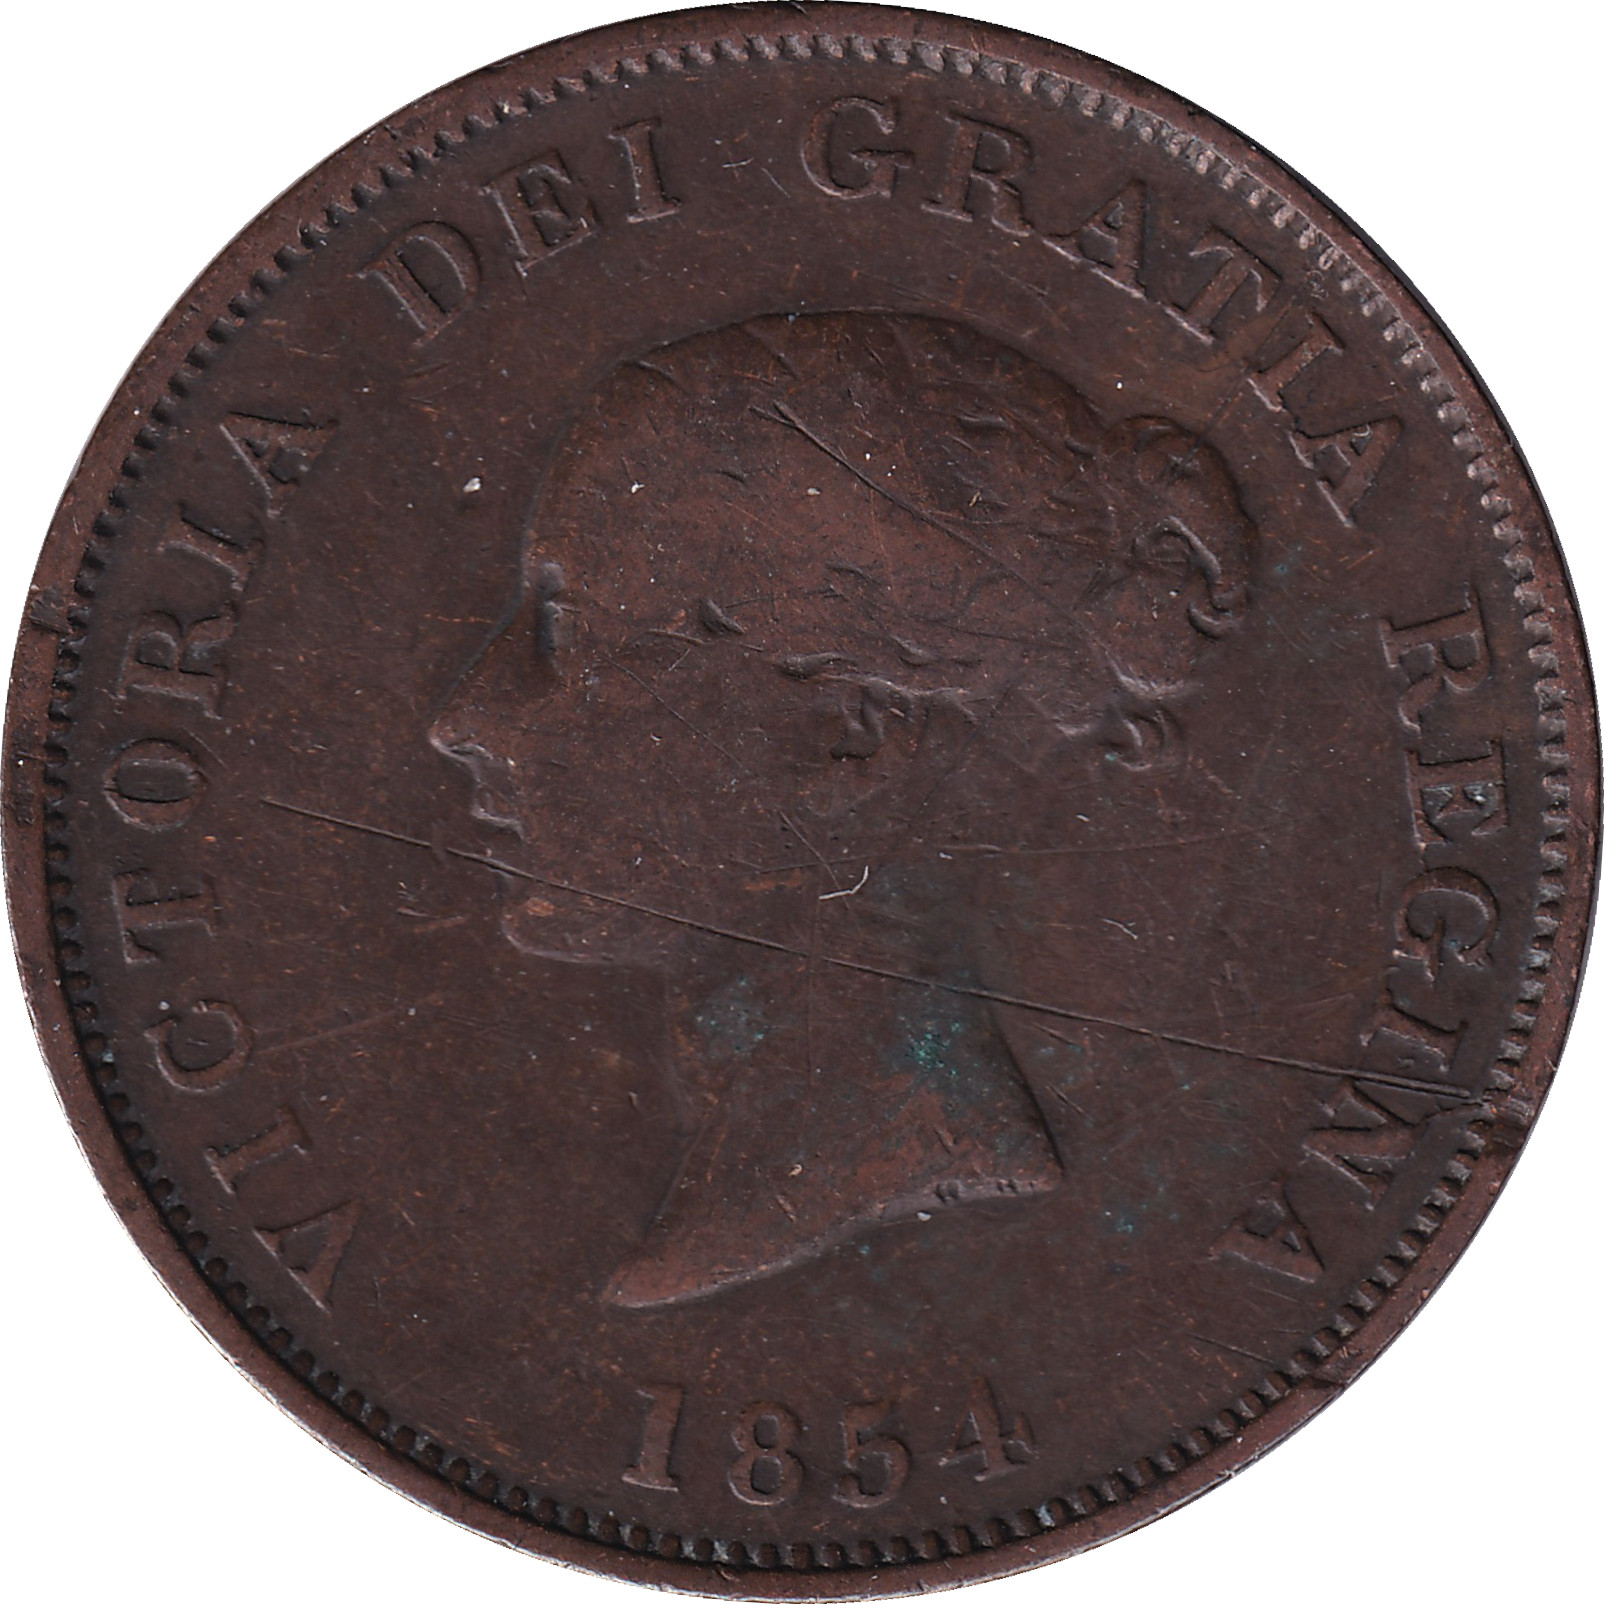 1 penny - Victoria - Tête mature